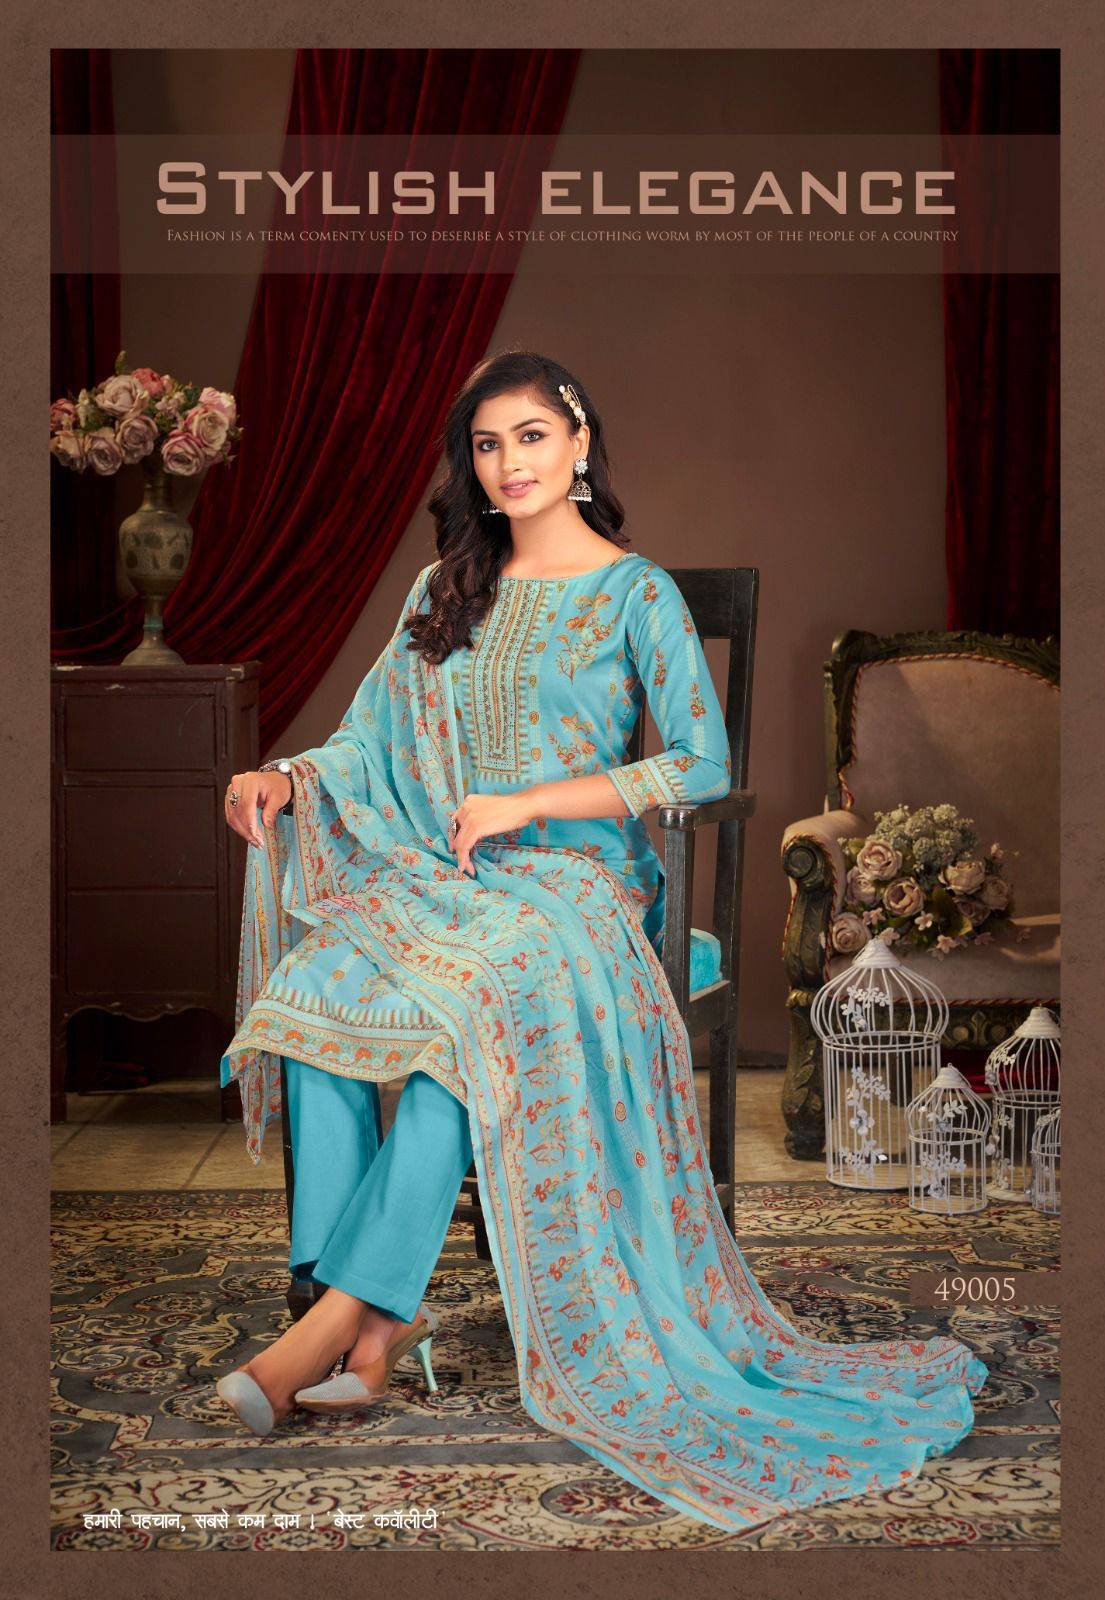 Punjabi Kudi Vol-49 By Shiv Gori Silk Mills 49001 To 49012 Series Beautiful Festive Suits Colorful Stylish Fancy Casual Wear & Ethnic Wear Pure Cotton Print Dresses At Wholesale Price